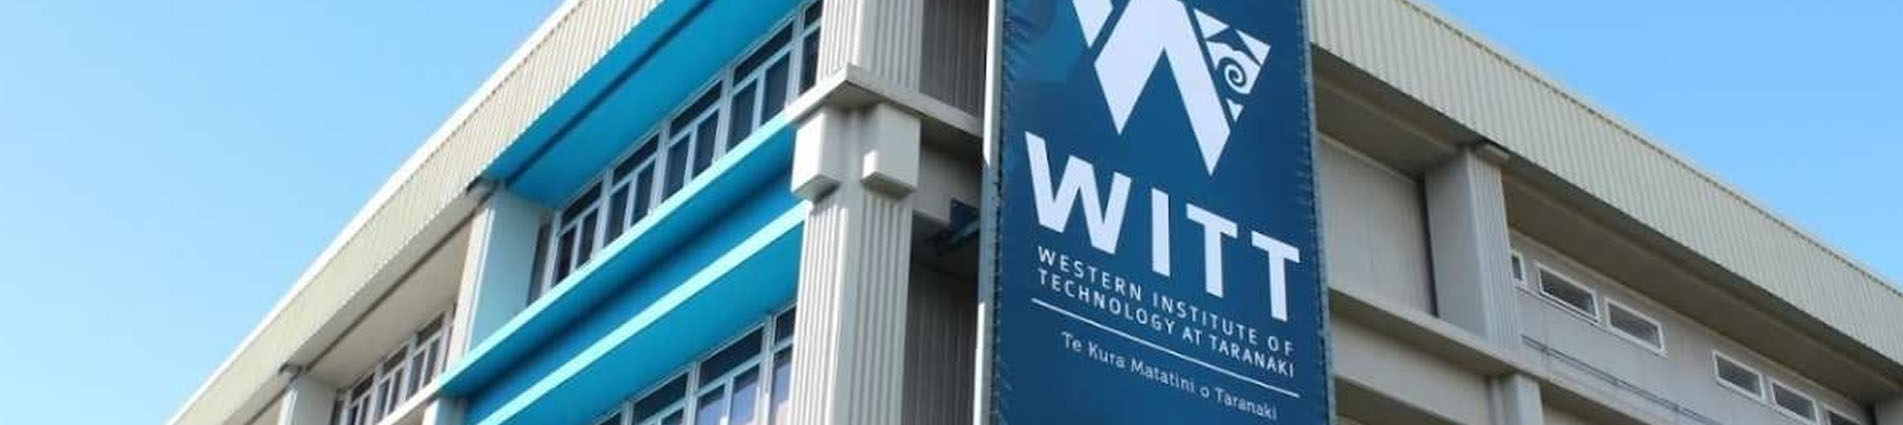 Western Institute of Technology at Taranaki